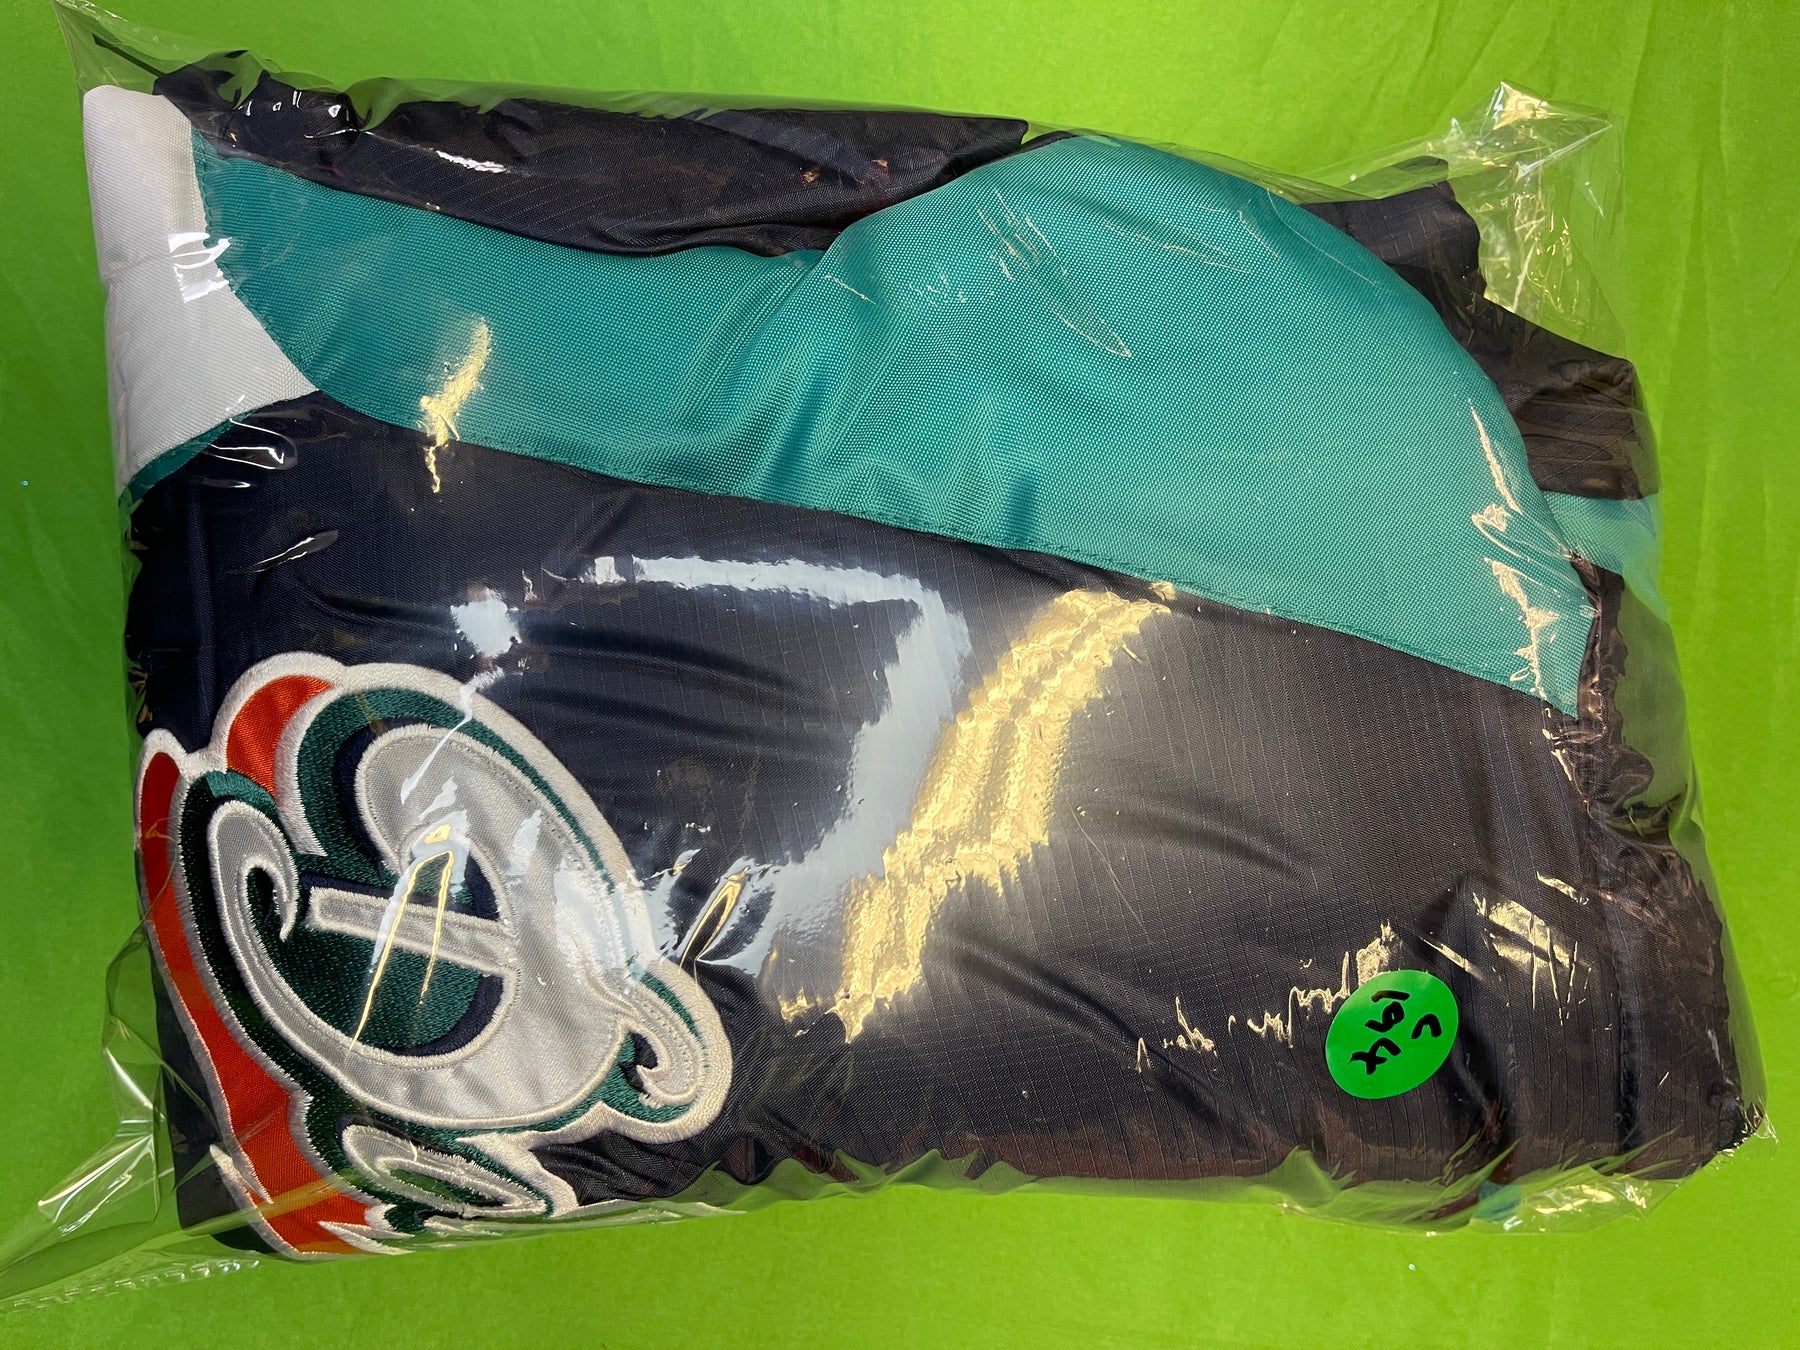 NFL Miami Dolphins GIII Reversible Water Resistant/Fleece Coat Women's Small